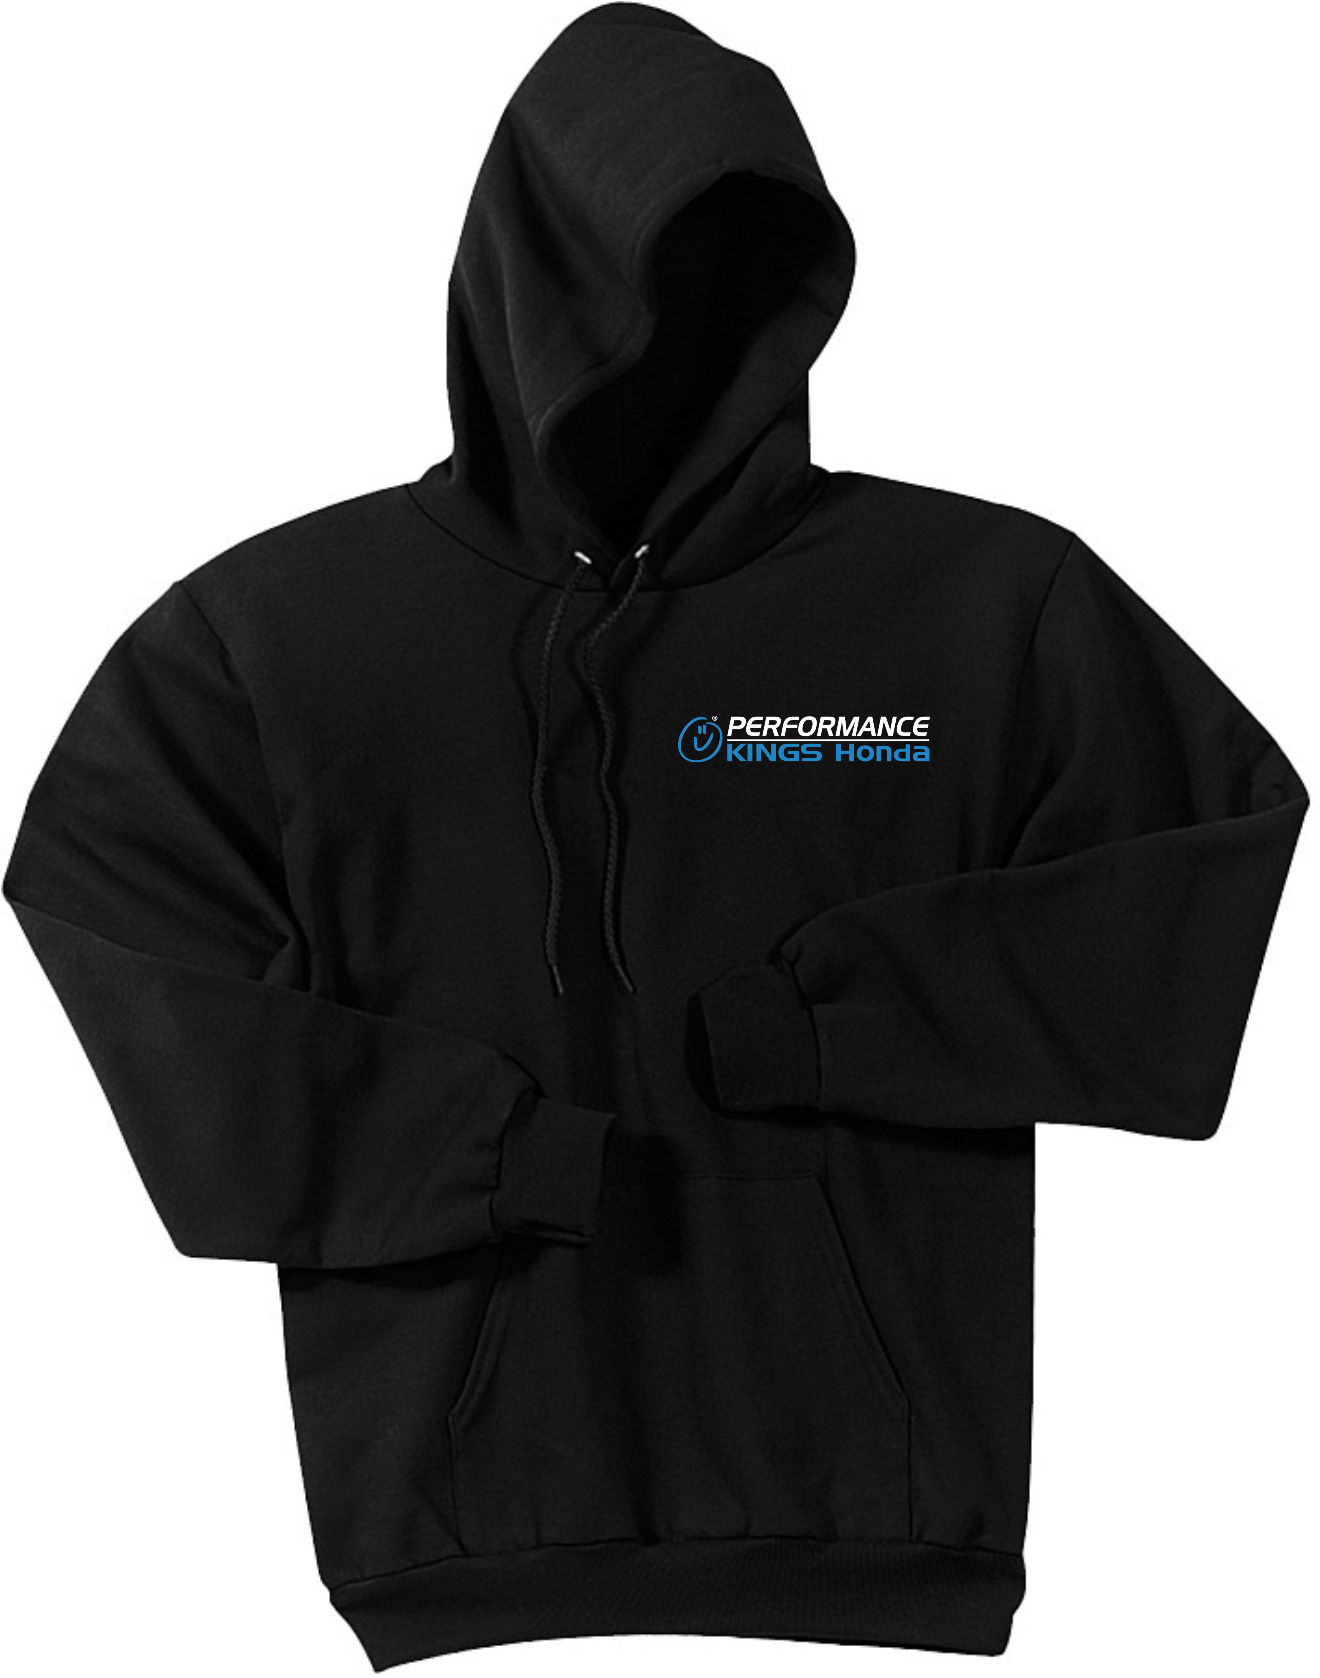 Performance Kings Honda – PC78H Port & Company® Core Fleece Pullover Hooded Sweatshirt